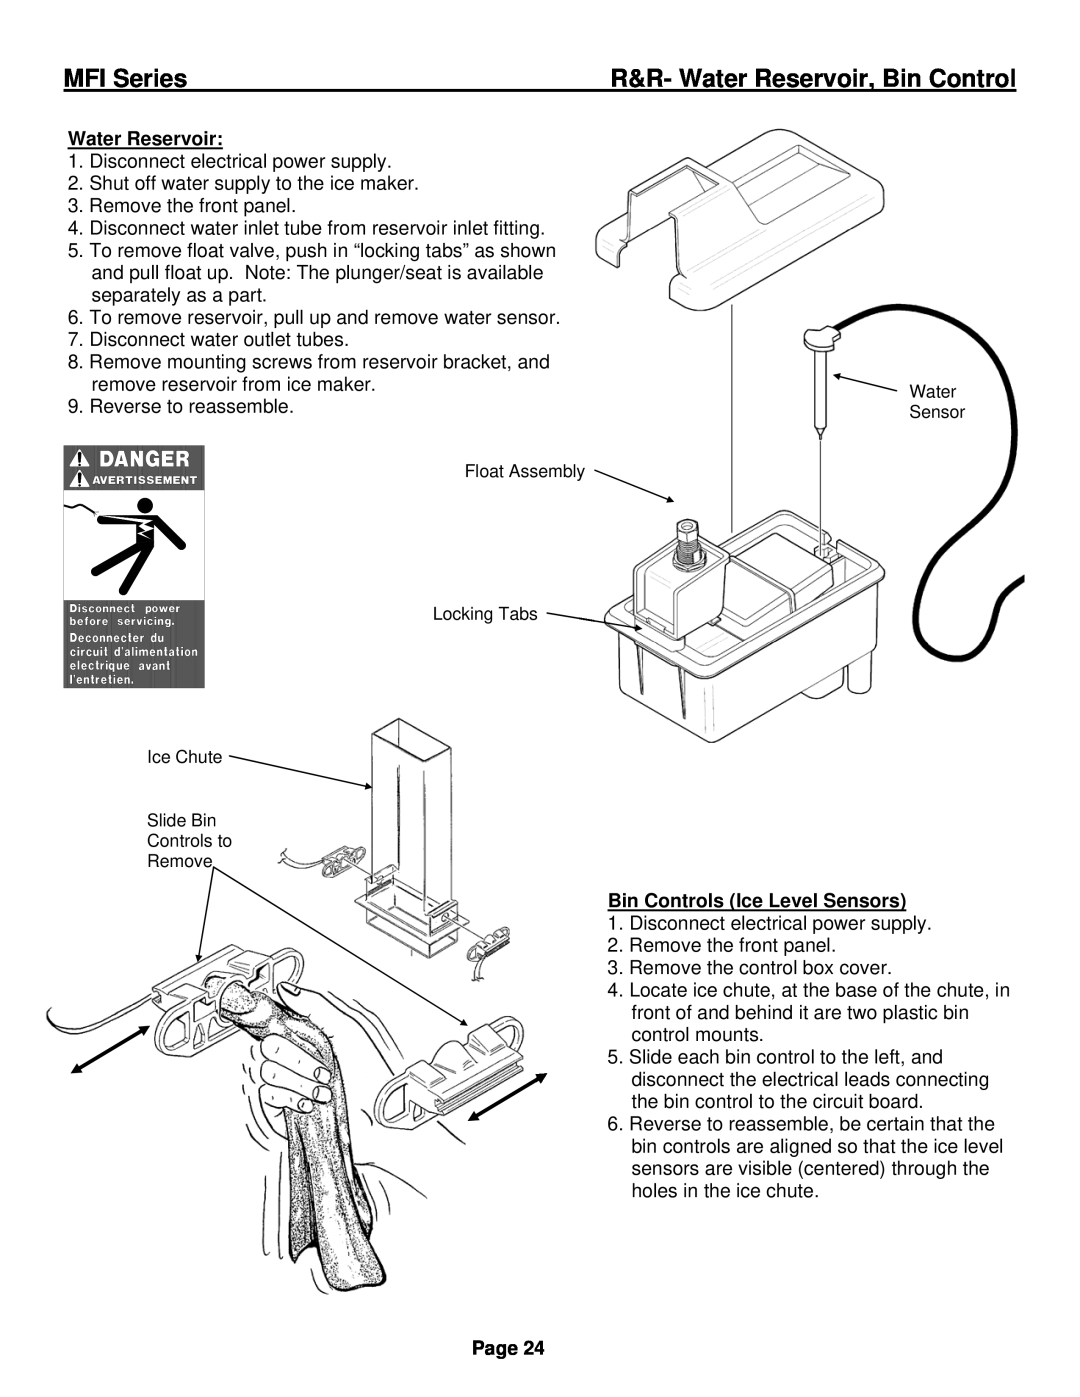 Ice-O-Matic installation manual R&R- Water Reservoir, Bin Control, Bin Controls Ice Level Sensors, MFI Series, Page 